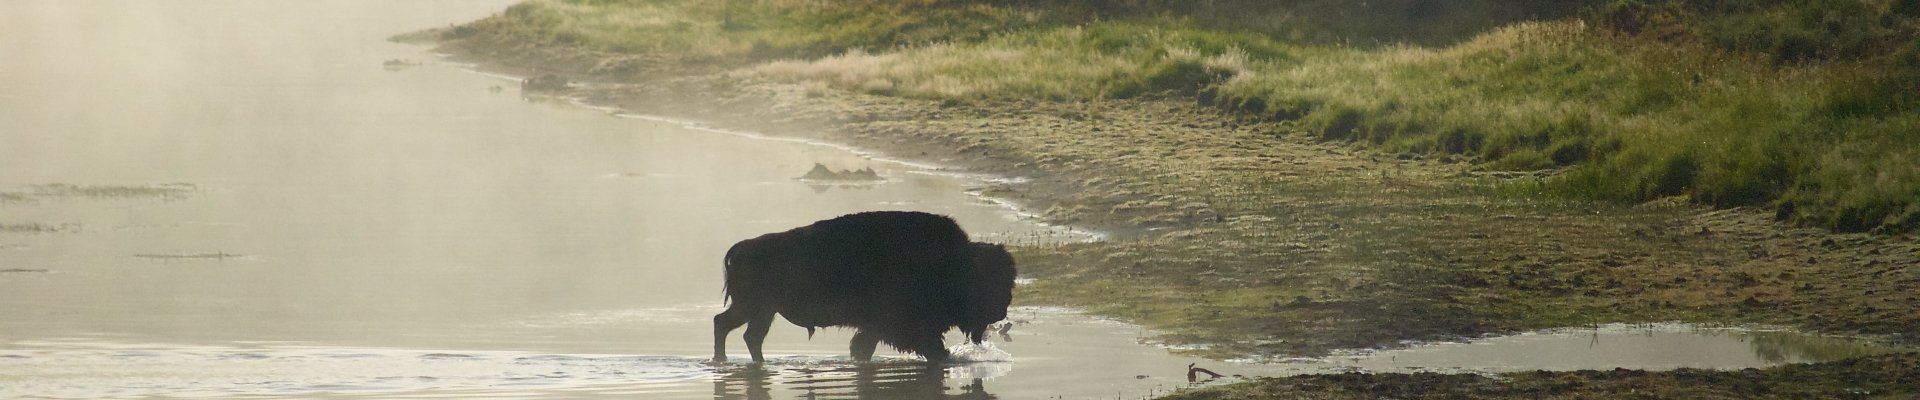 Bull buffalo bison crossing the river in Yellowstone